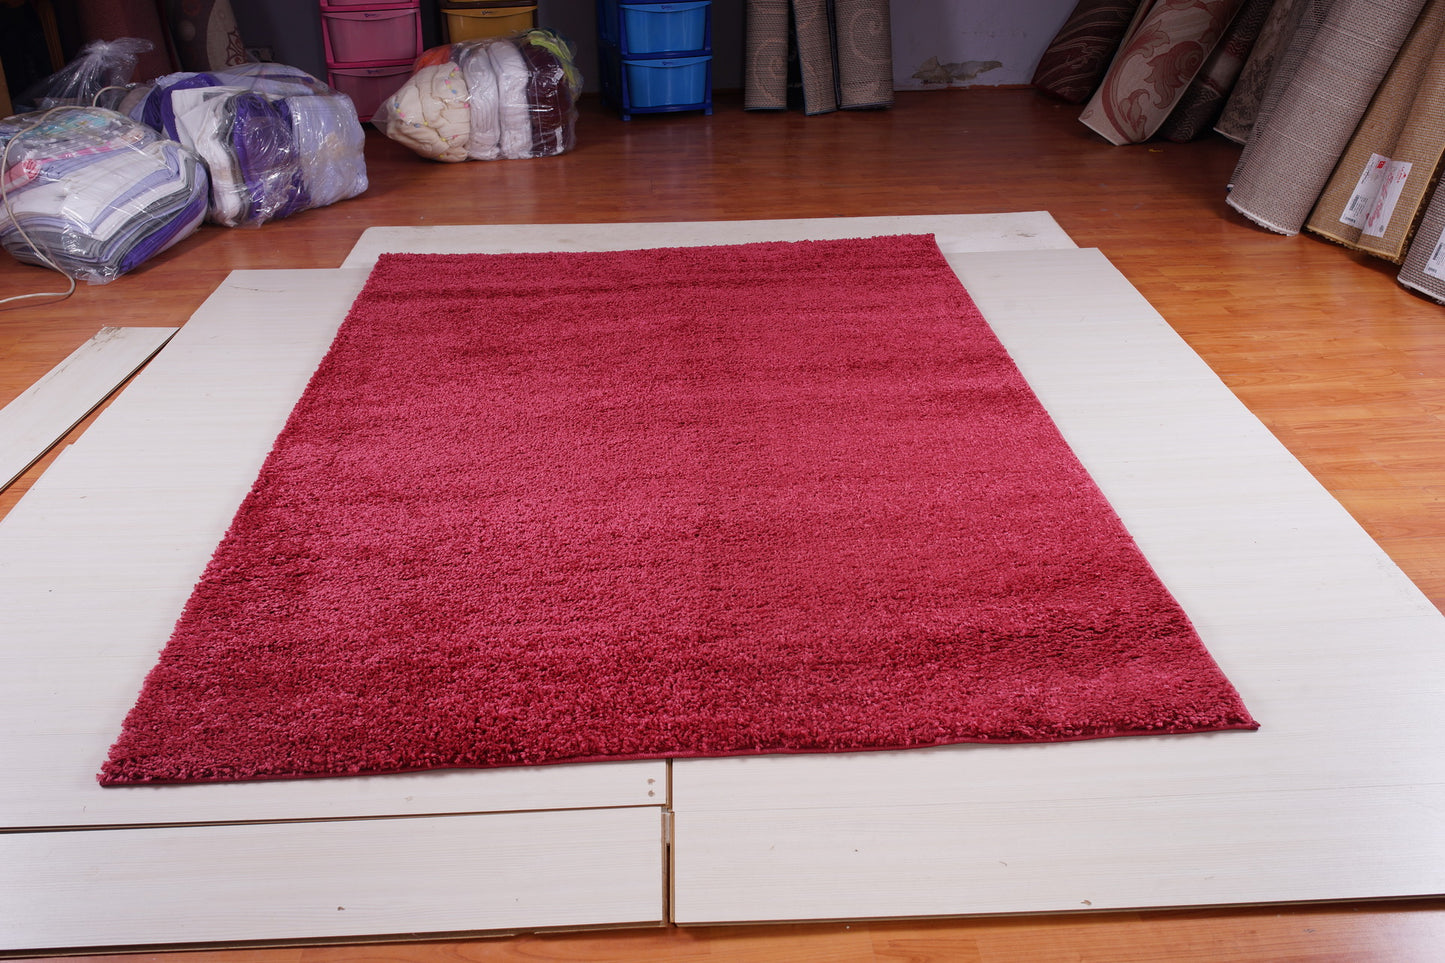 ladole rugs solid rose red shaggy meknes durable medium pile indoor area rug carpet 8x11 710 x 105 240cm x 320cm 6x8, 6x9 ft Living Room, Bedroom, Dining Area, Kitchen Carpet